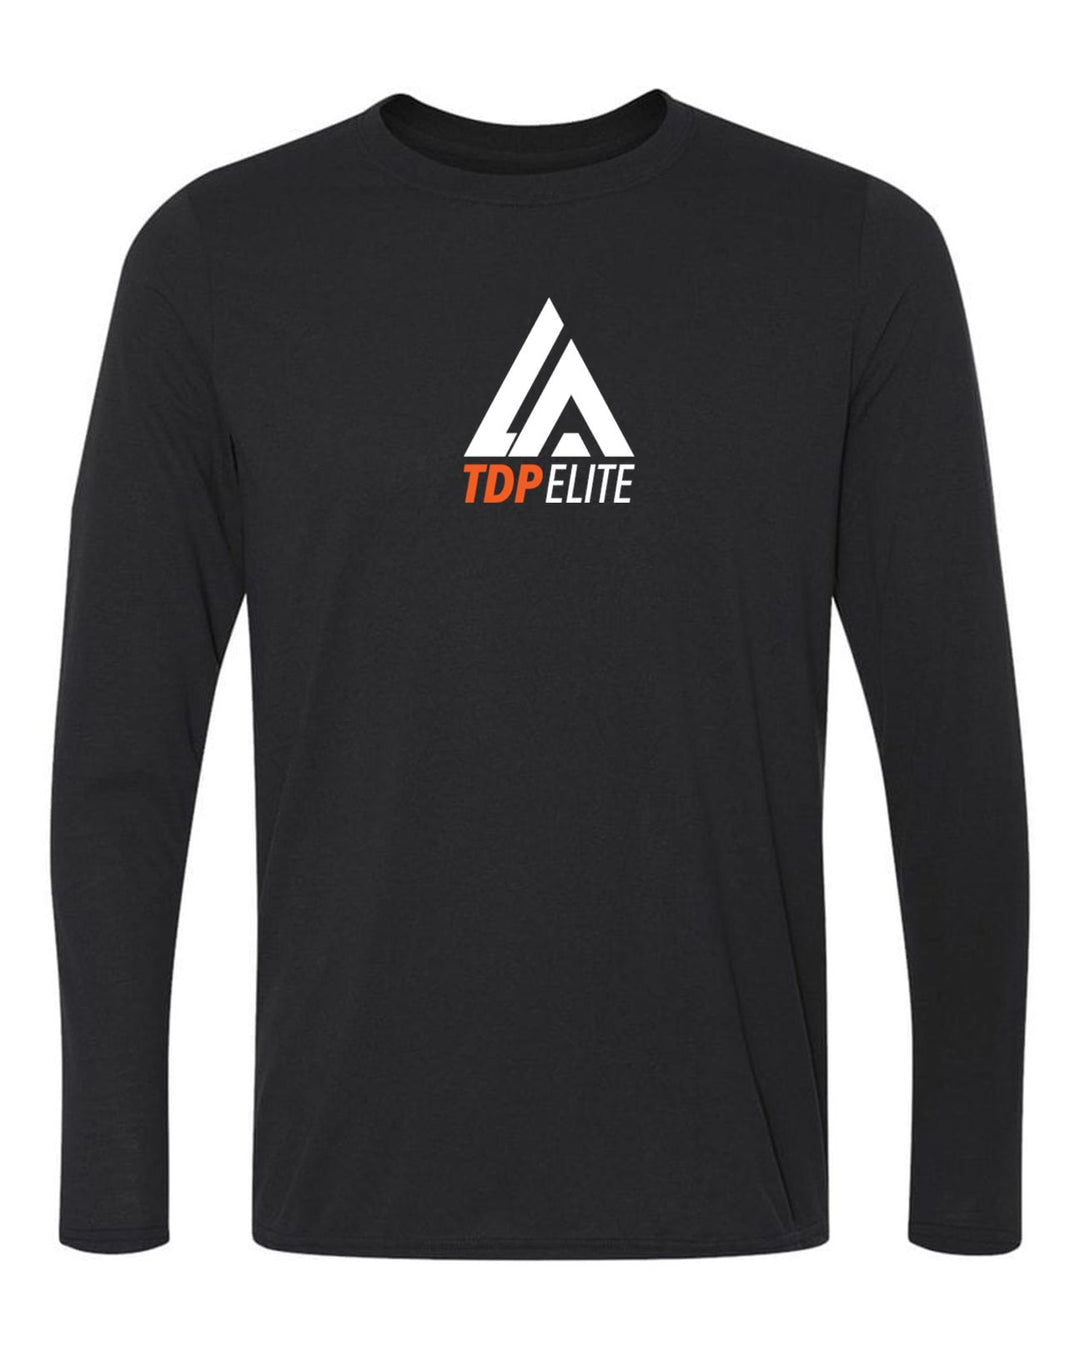 LATDP Elite Long-Sleeve T-Shirt LATDP Spiritwear BLACK YOUTH LARGE - Third Coast Soccer